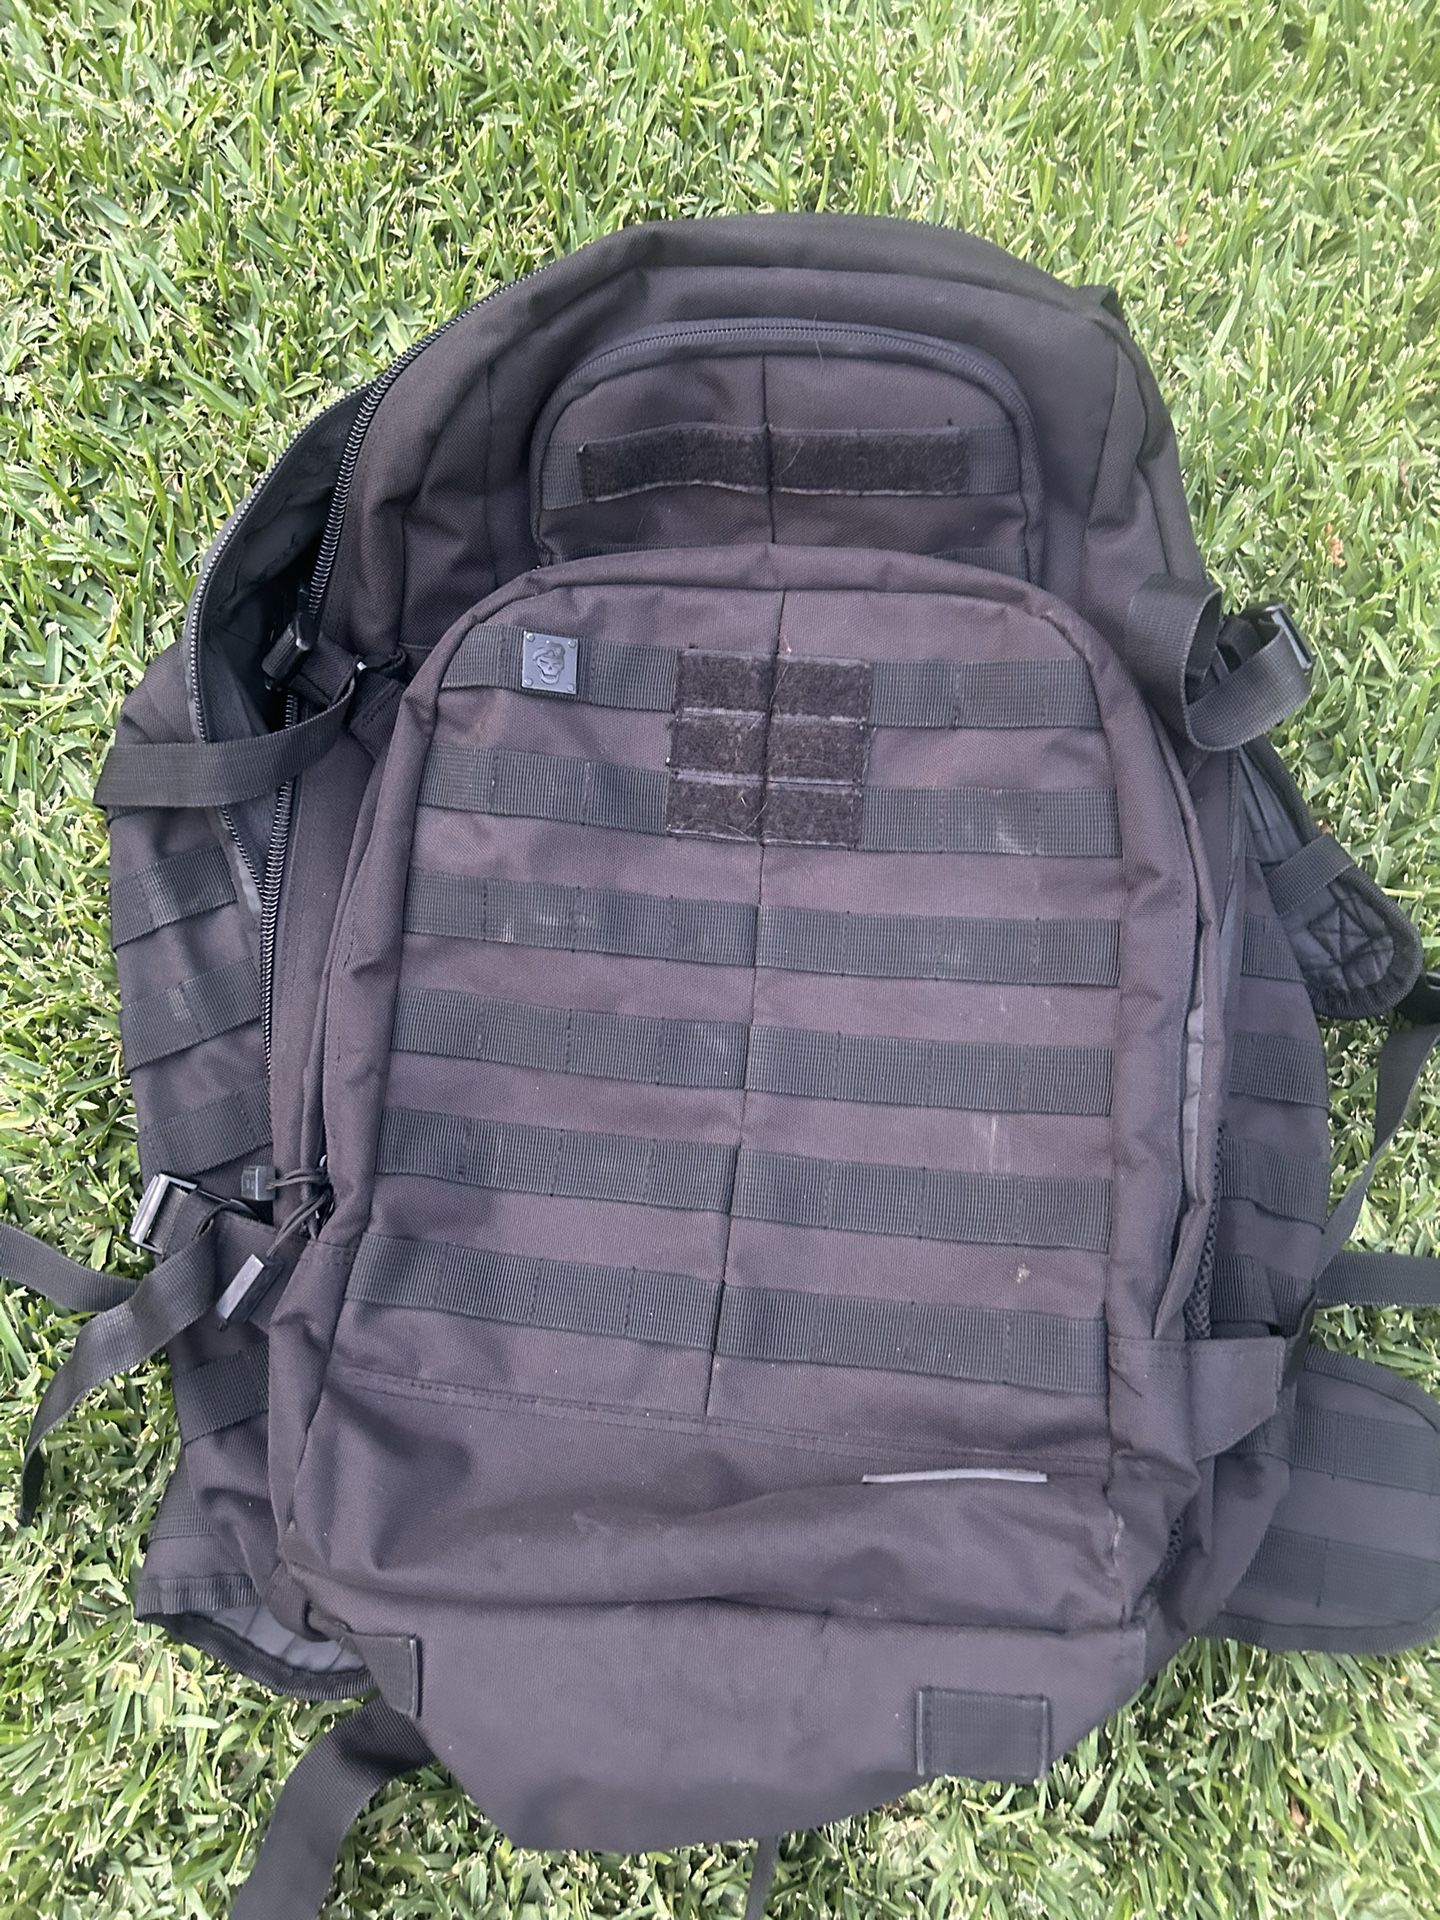 Backpack (Mochila)